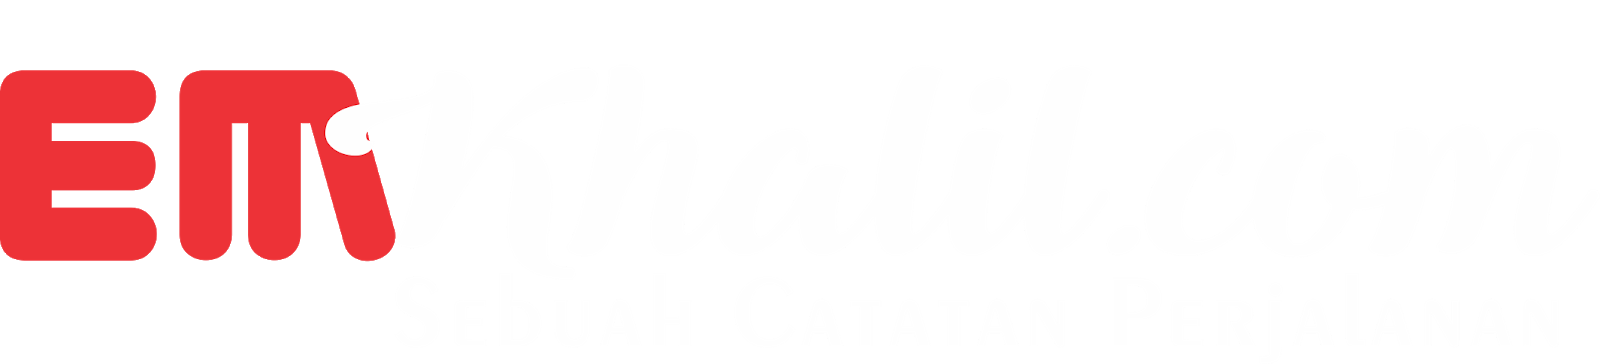 EMKHALIL.COM